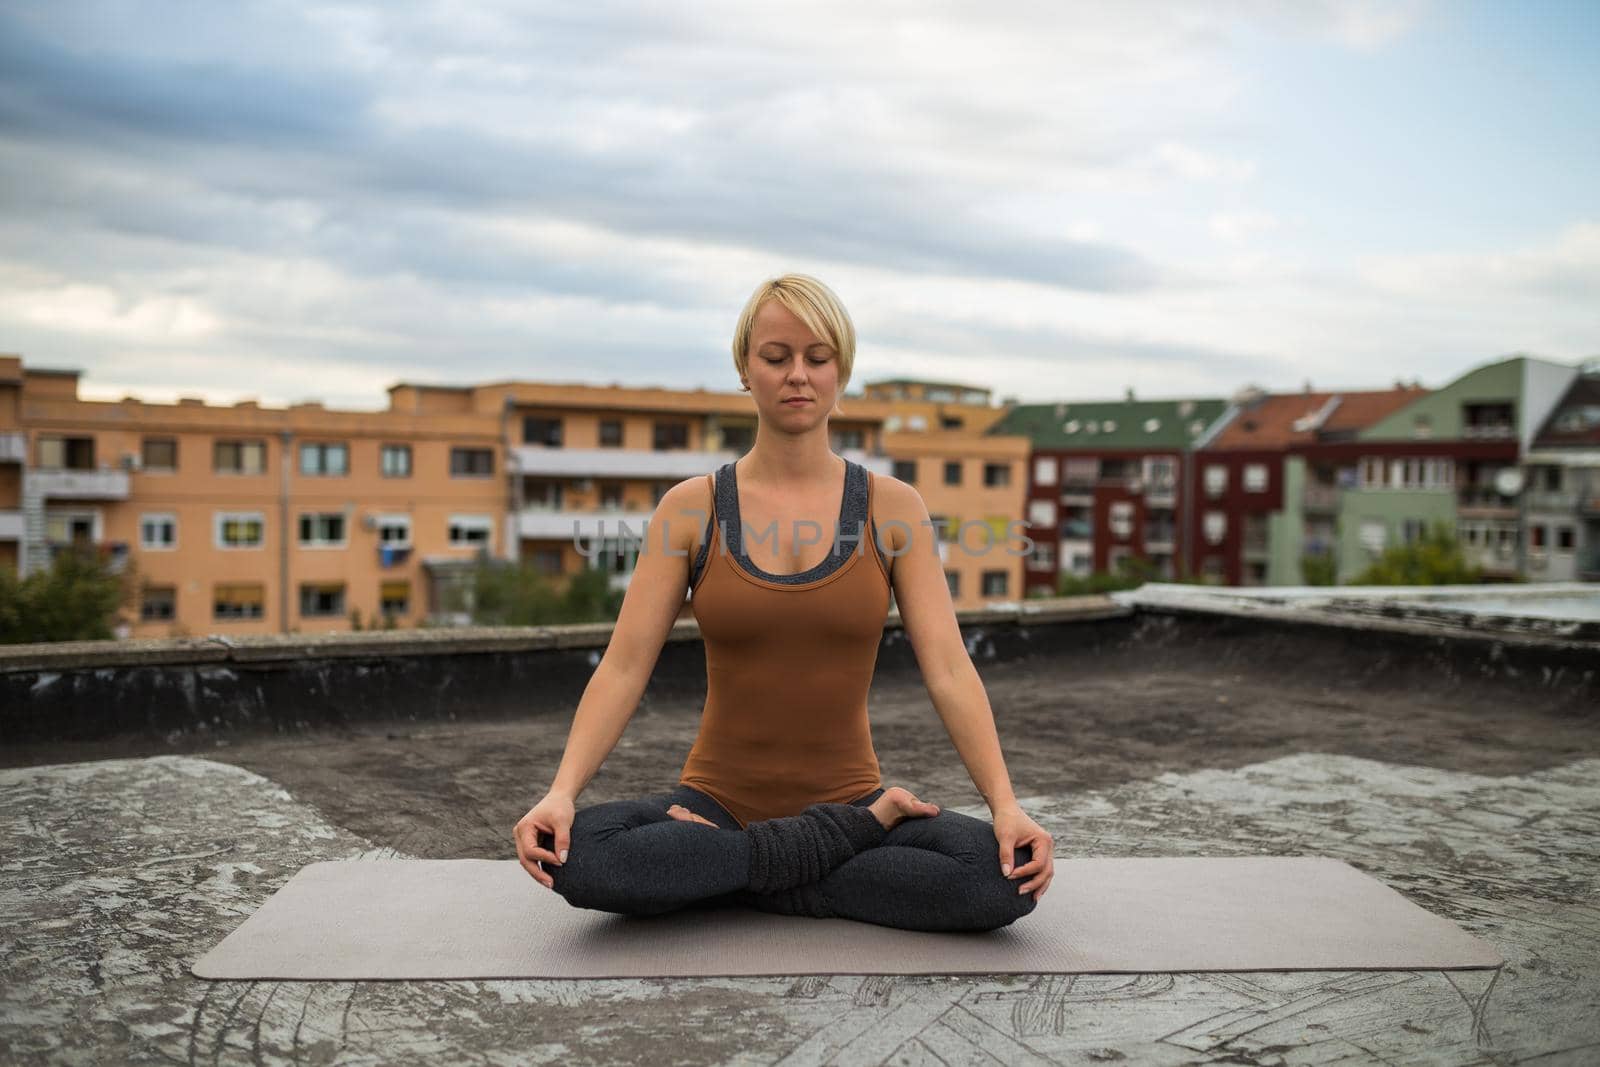 Woman enjoys practicing yoga on the roof,Ardha Padmasana/Half-lotus pose